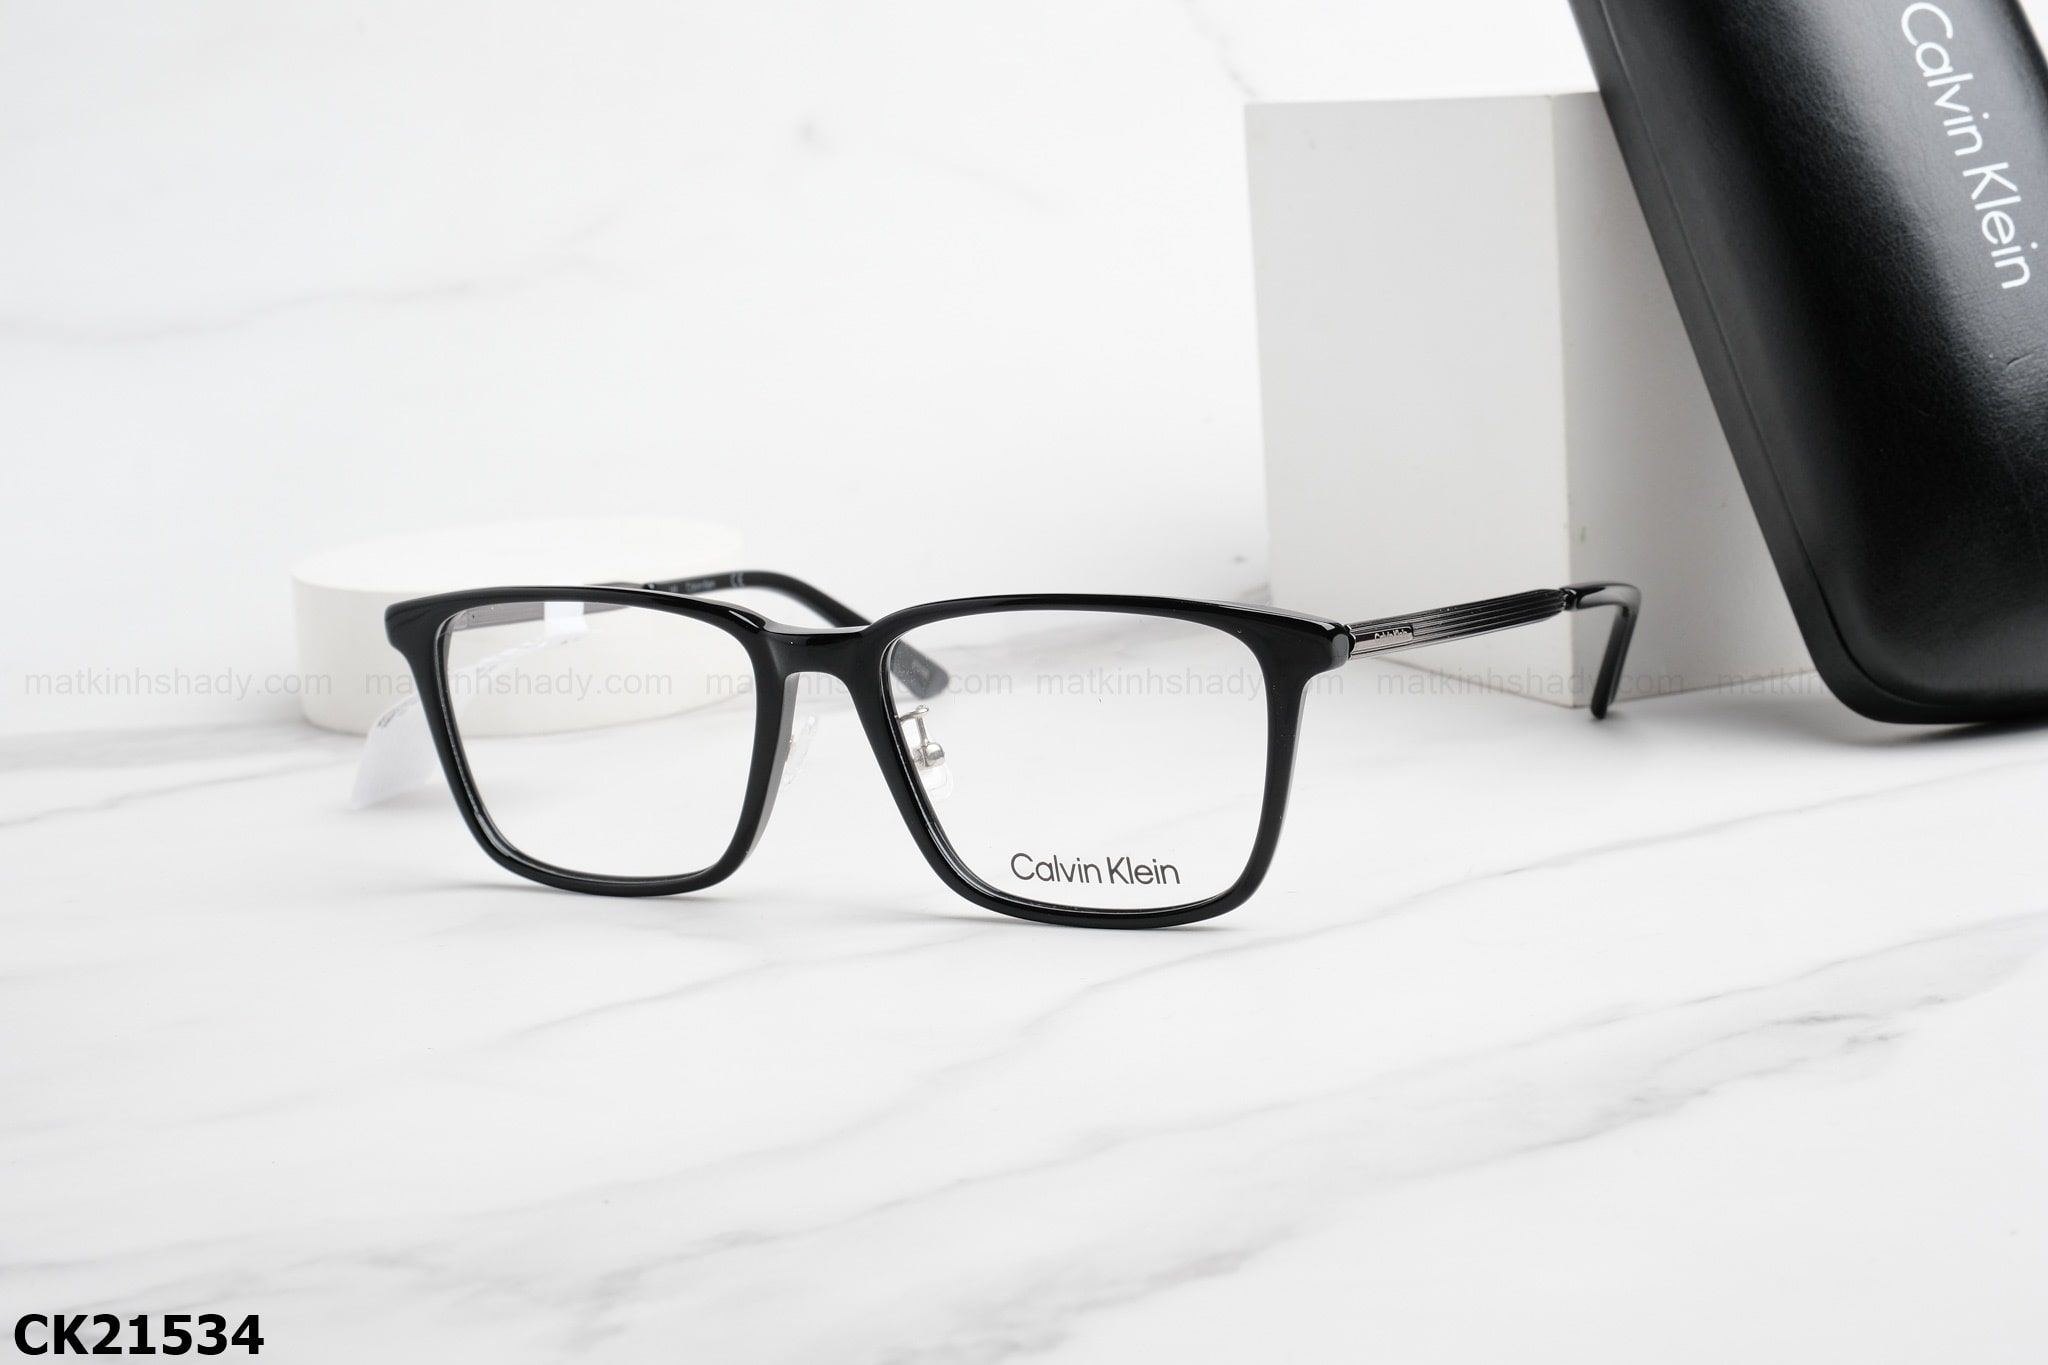  Calvin Klein Eyewear - Glasses - CK21534 